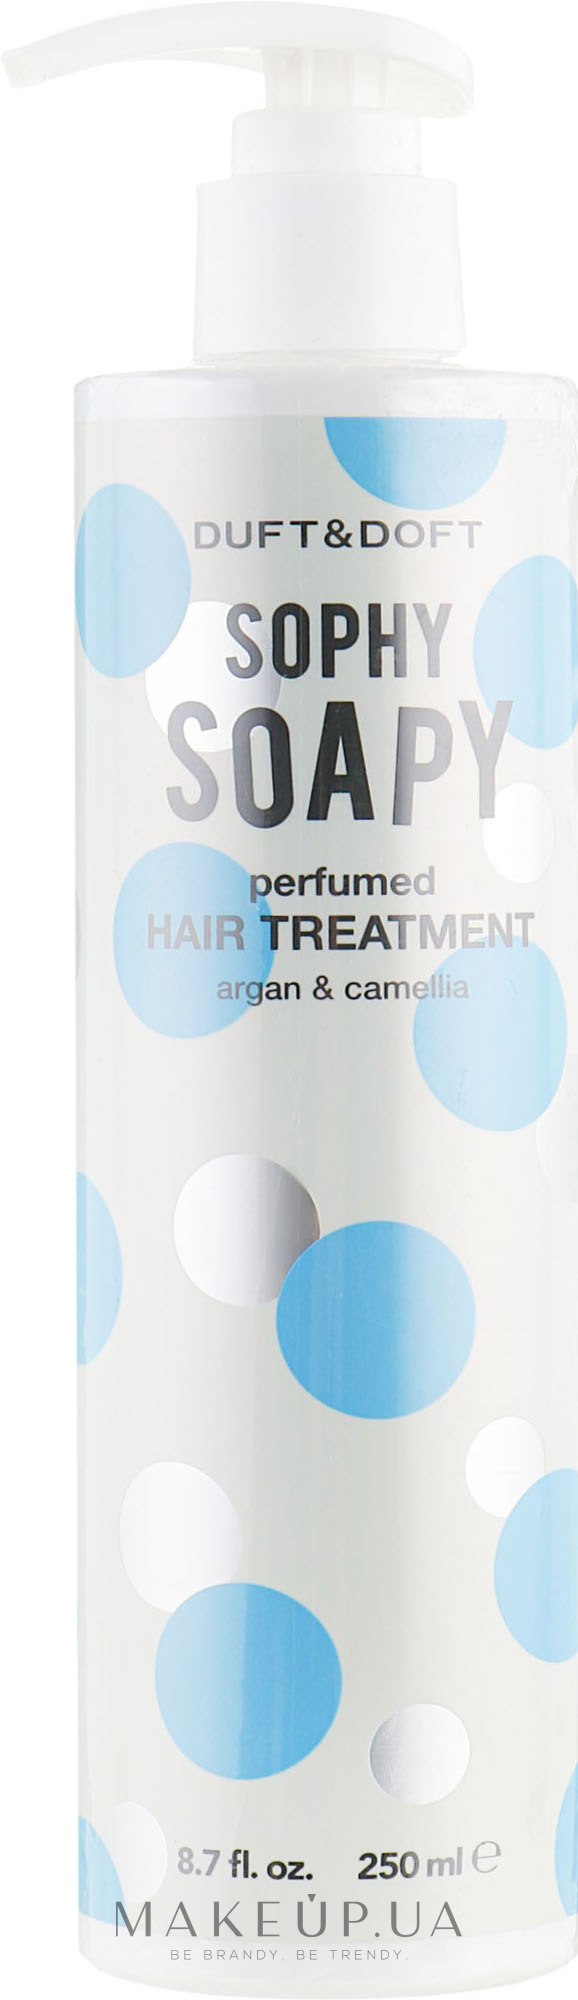 Восстанавливающий комплекс для волос - Duft & Doft Sophy Soapy Perfumed Hair Treatment — фото 250ml